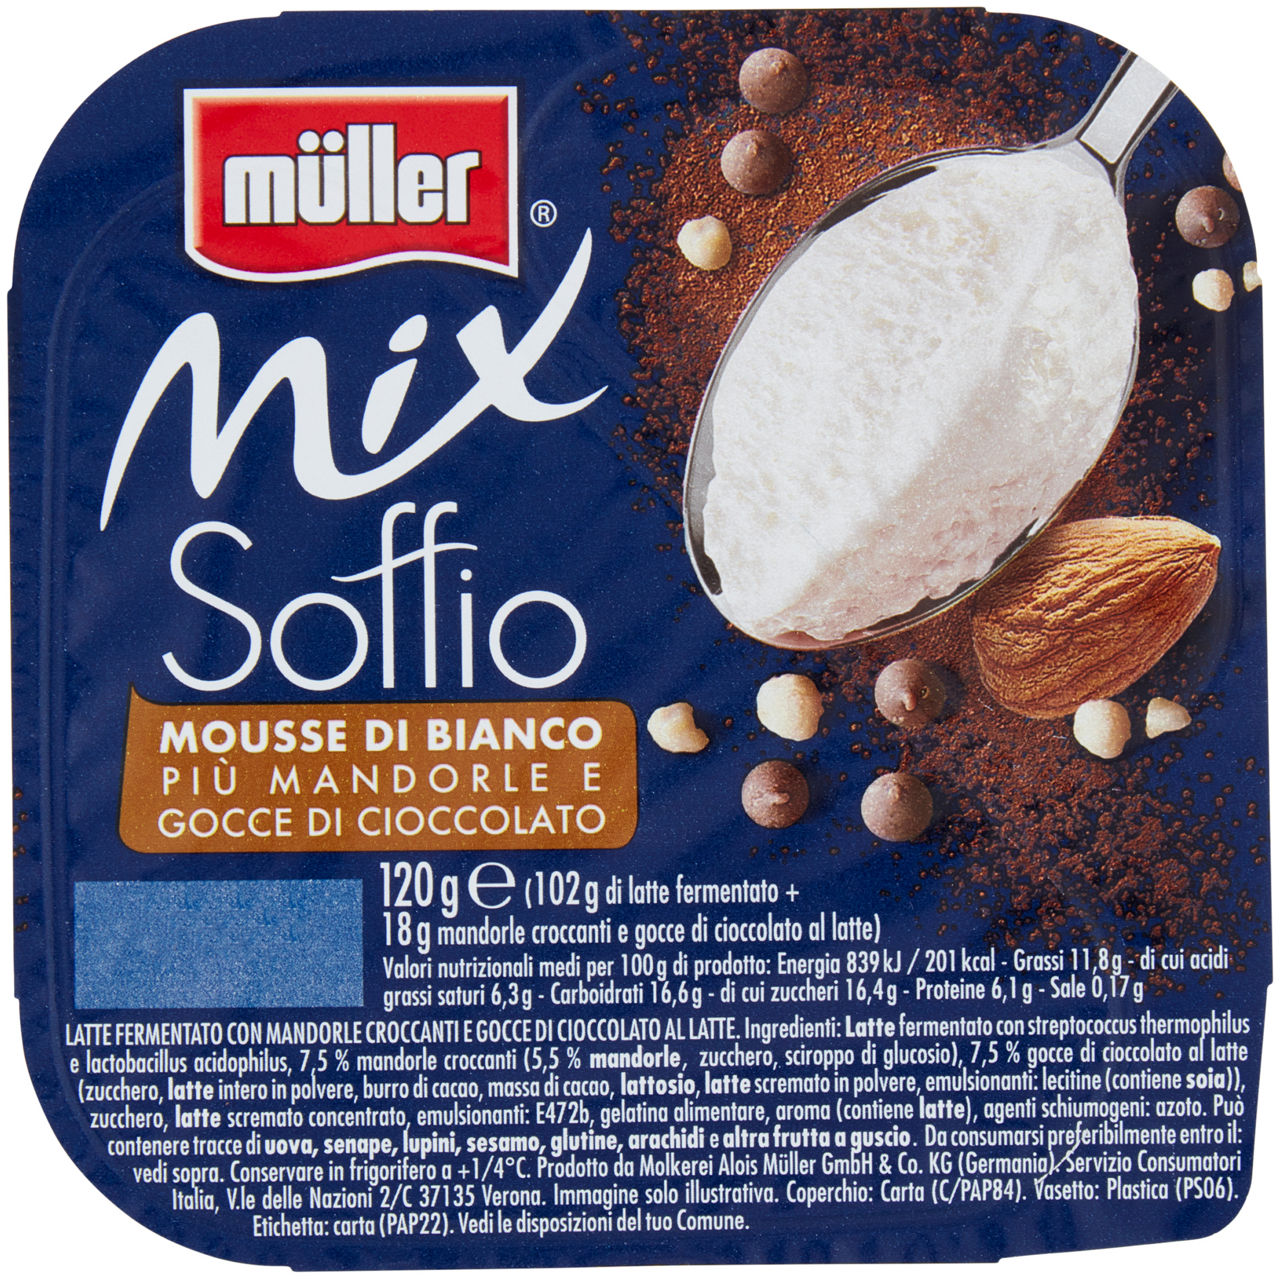 Yogurt mix soffio più mandorle gocce di cioccolato muller  g 120